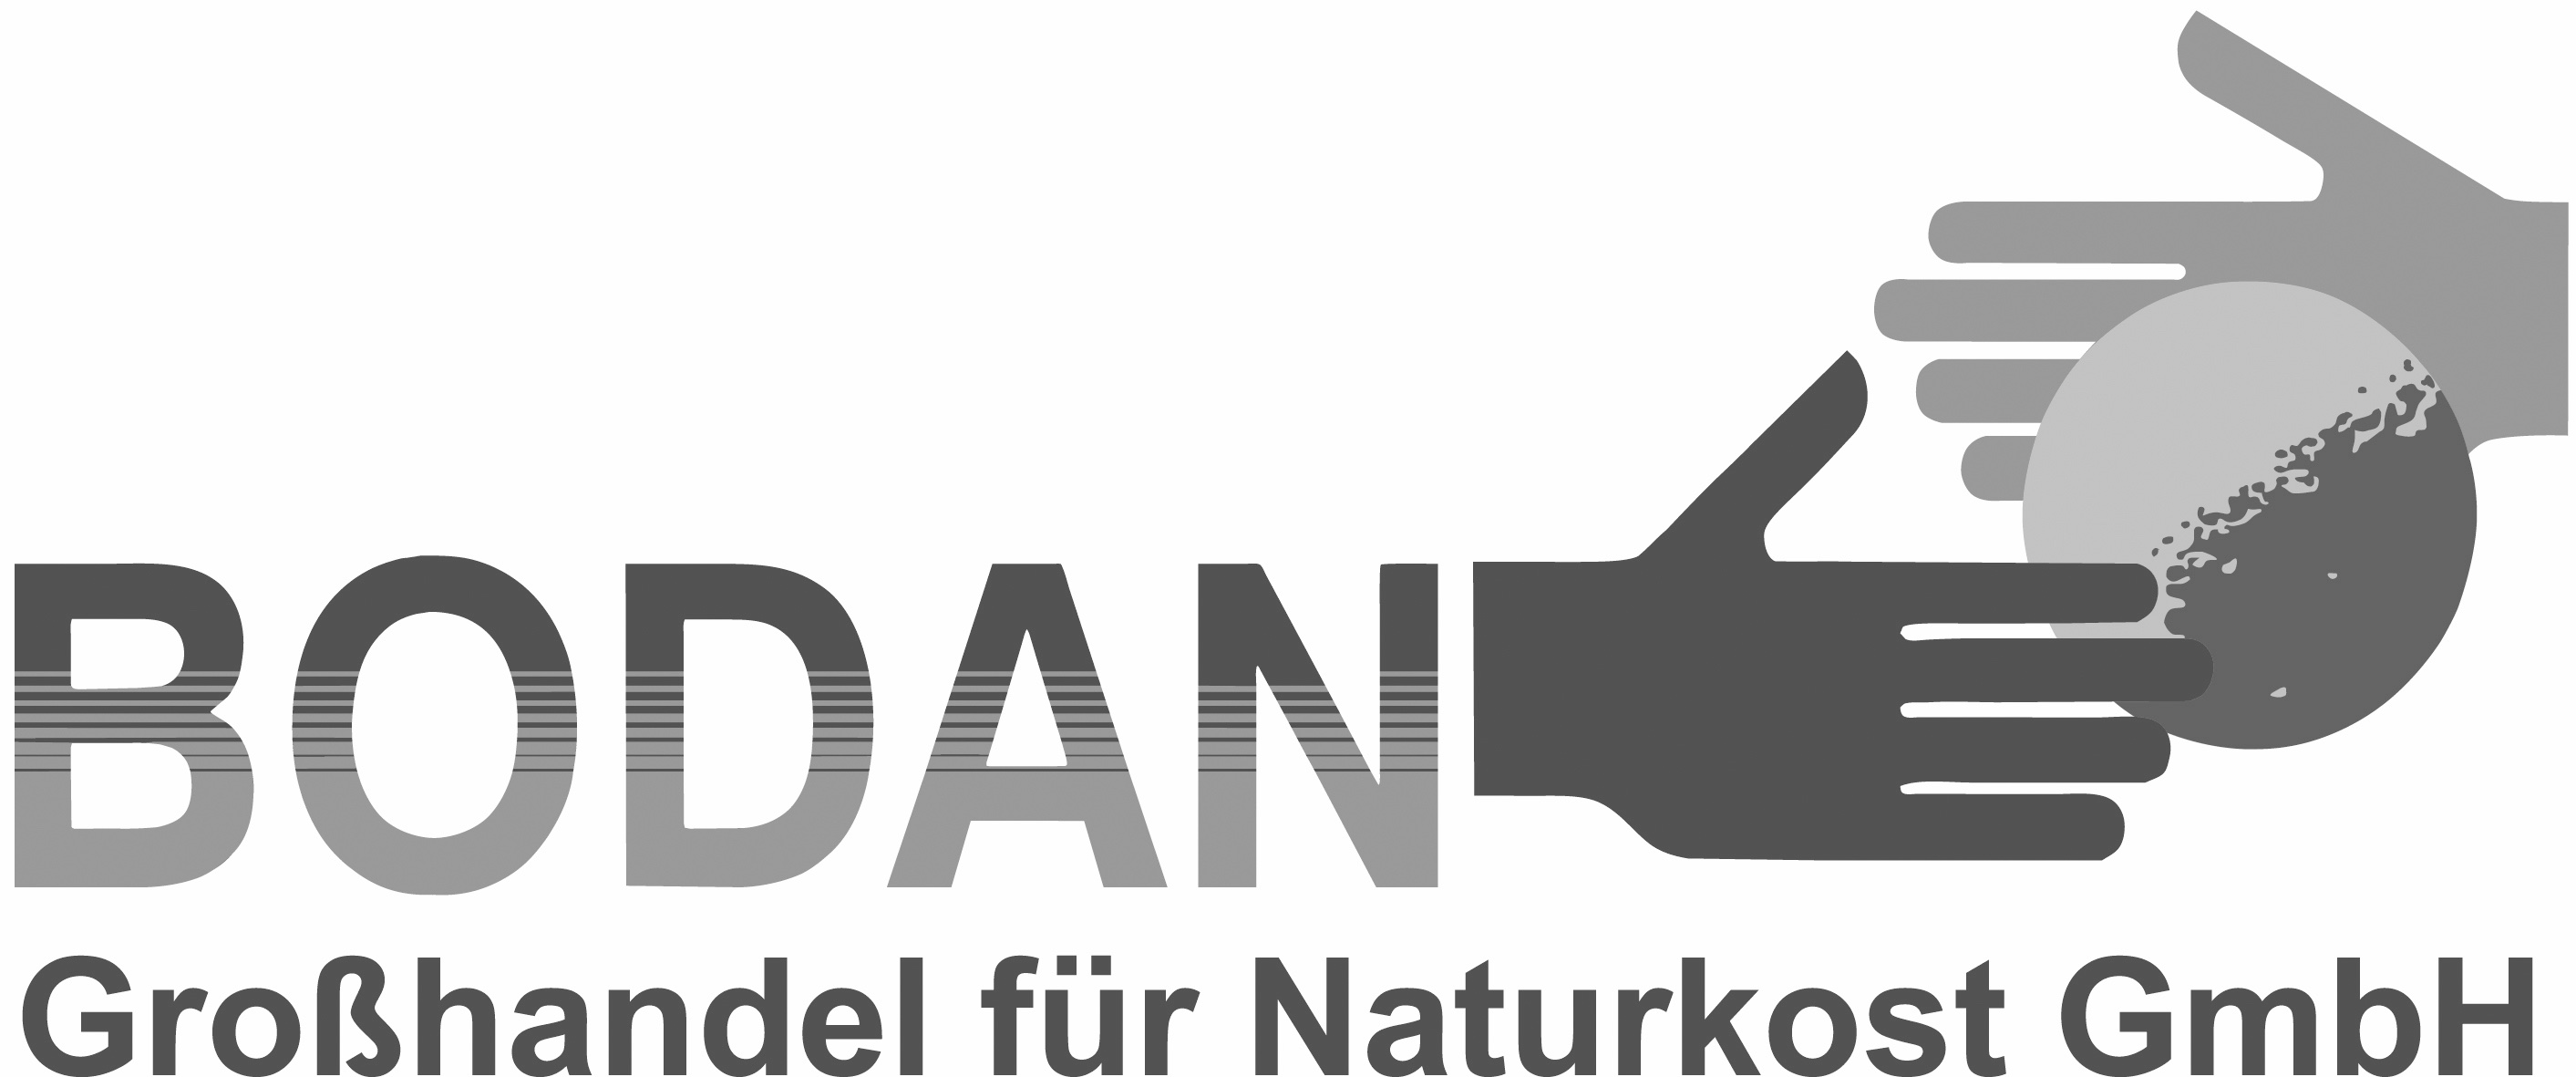 Bodan GmbH